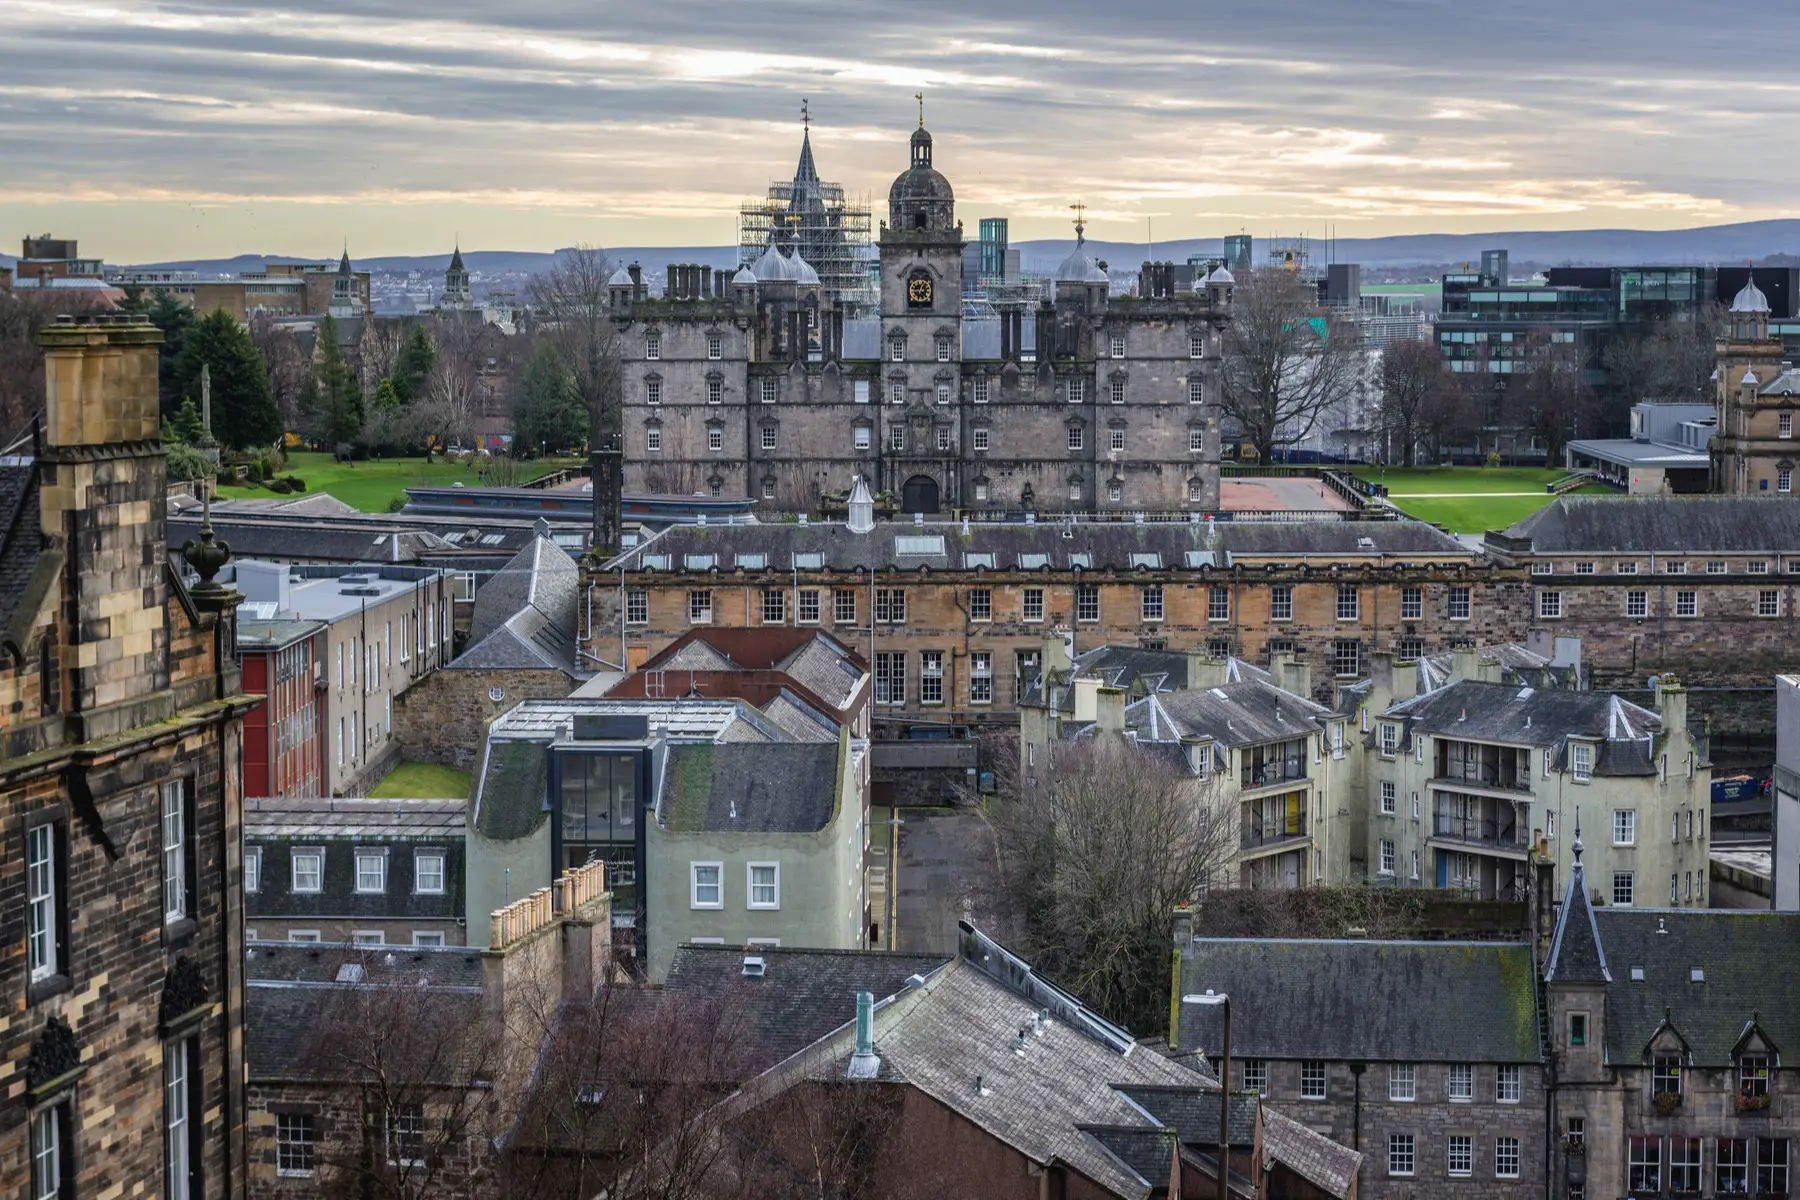 George Heriot's School in Edinburgh, Scotland